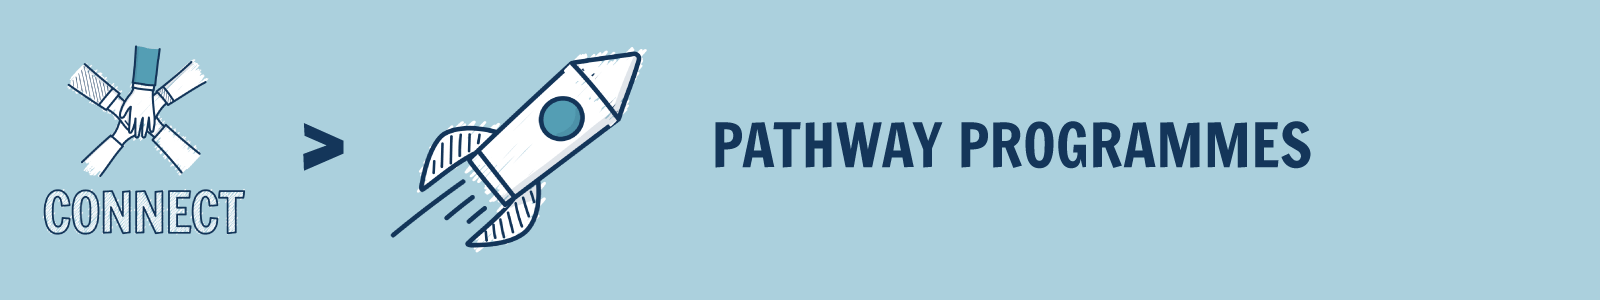 Pathway Programmes - British Rowing